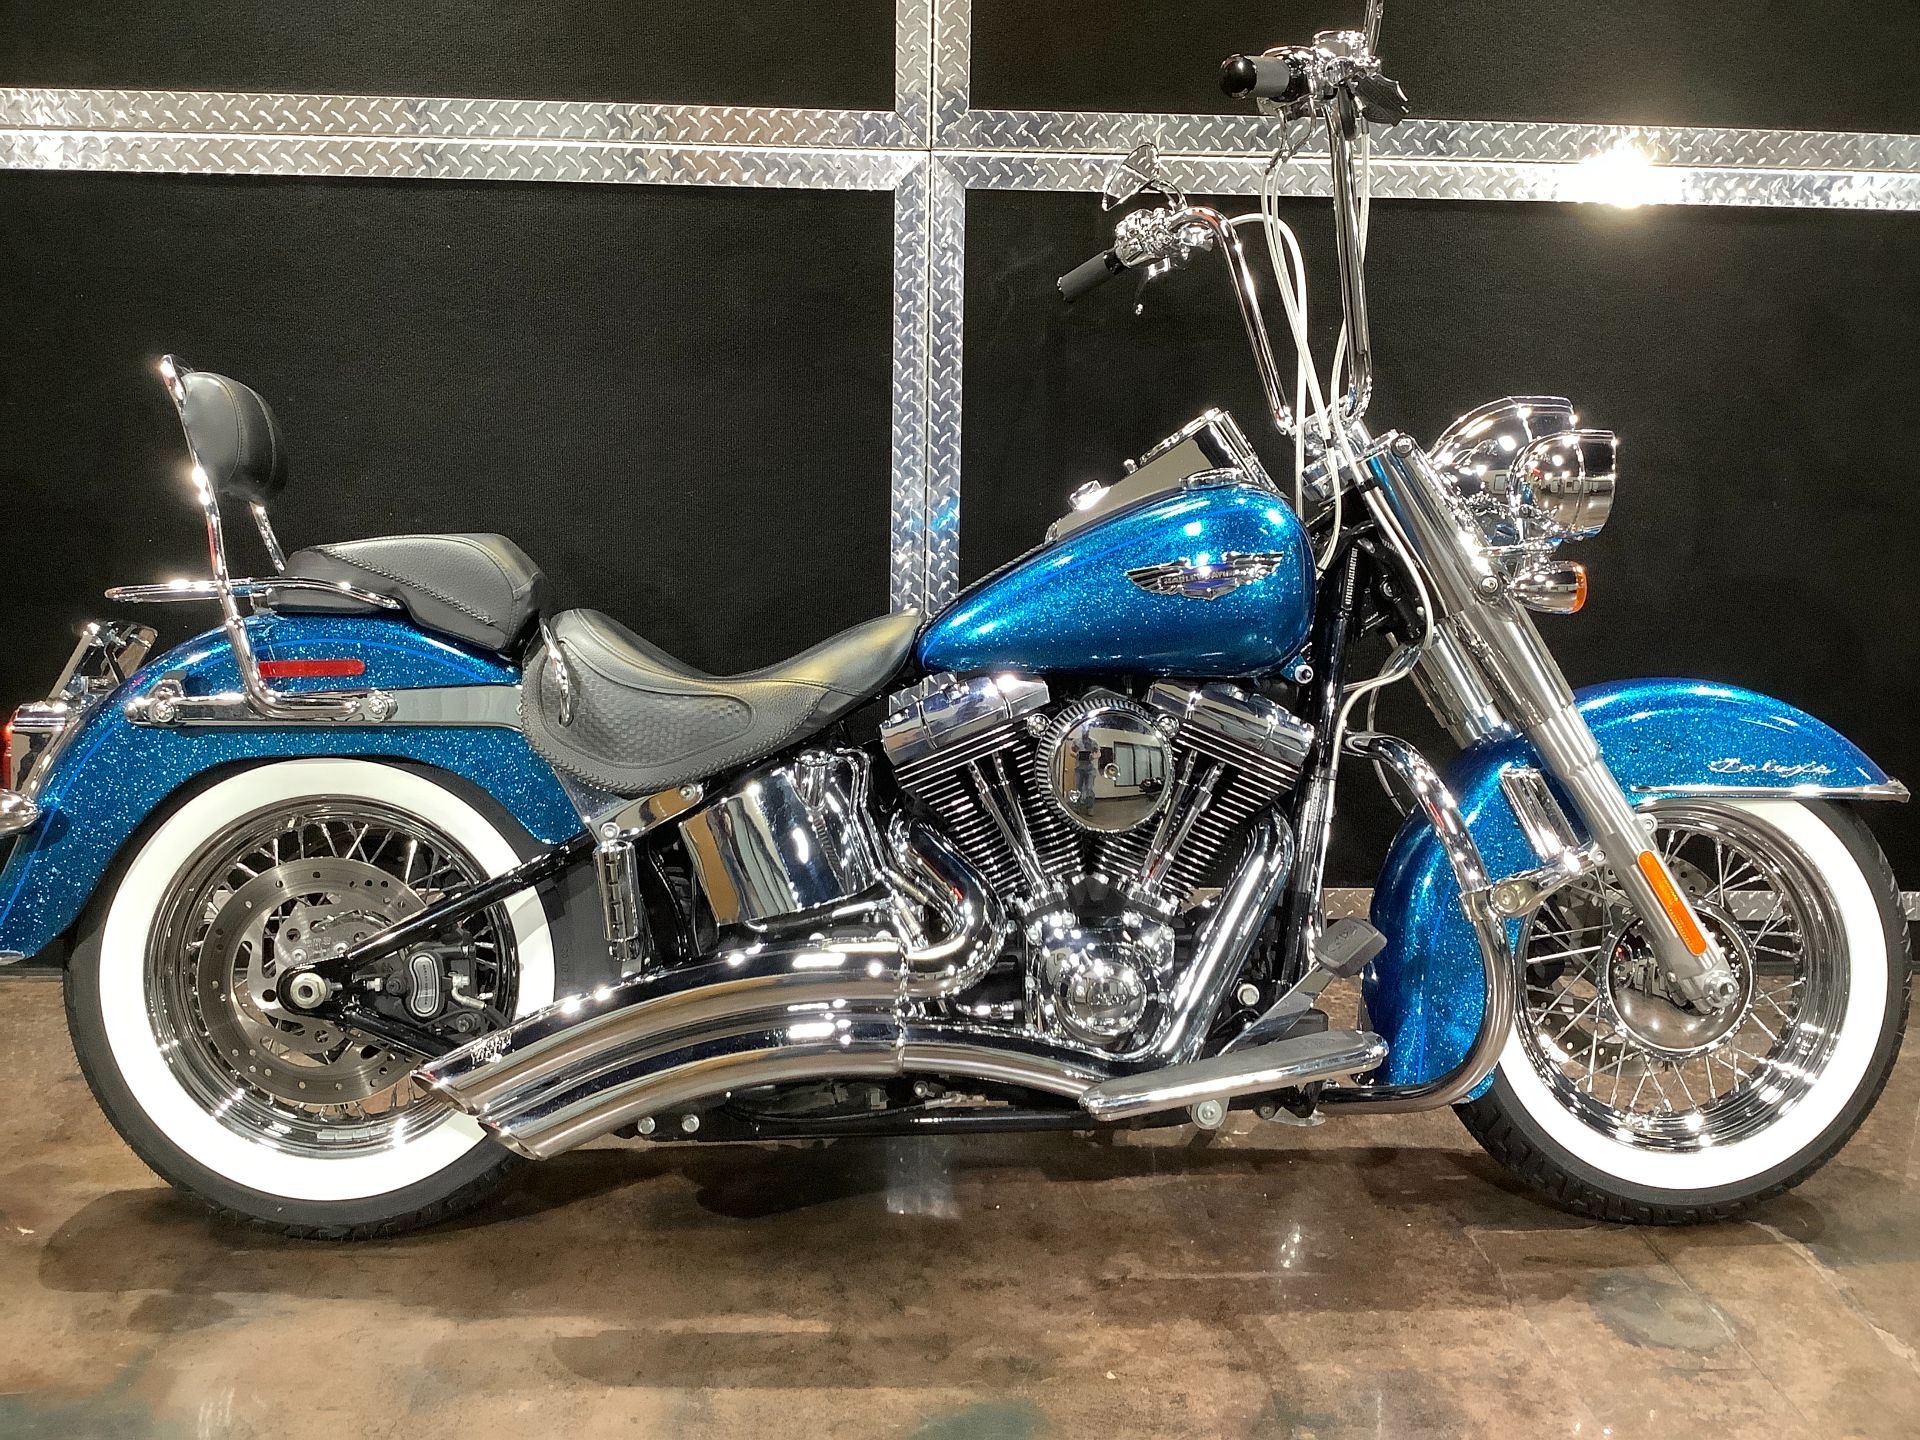 2015 Harley-Davidson Softail® Deluxe in Burlington, Iowa - Photo 12